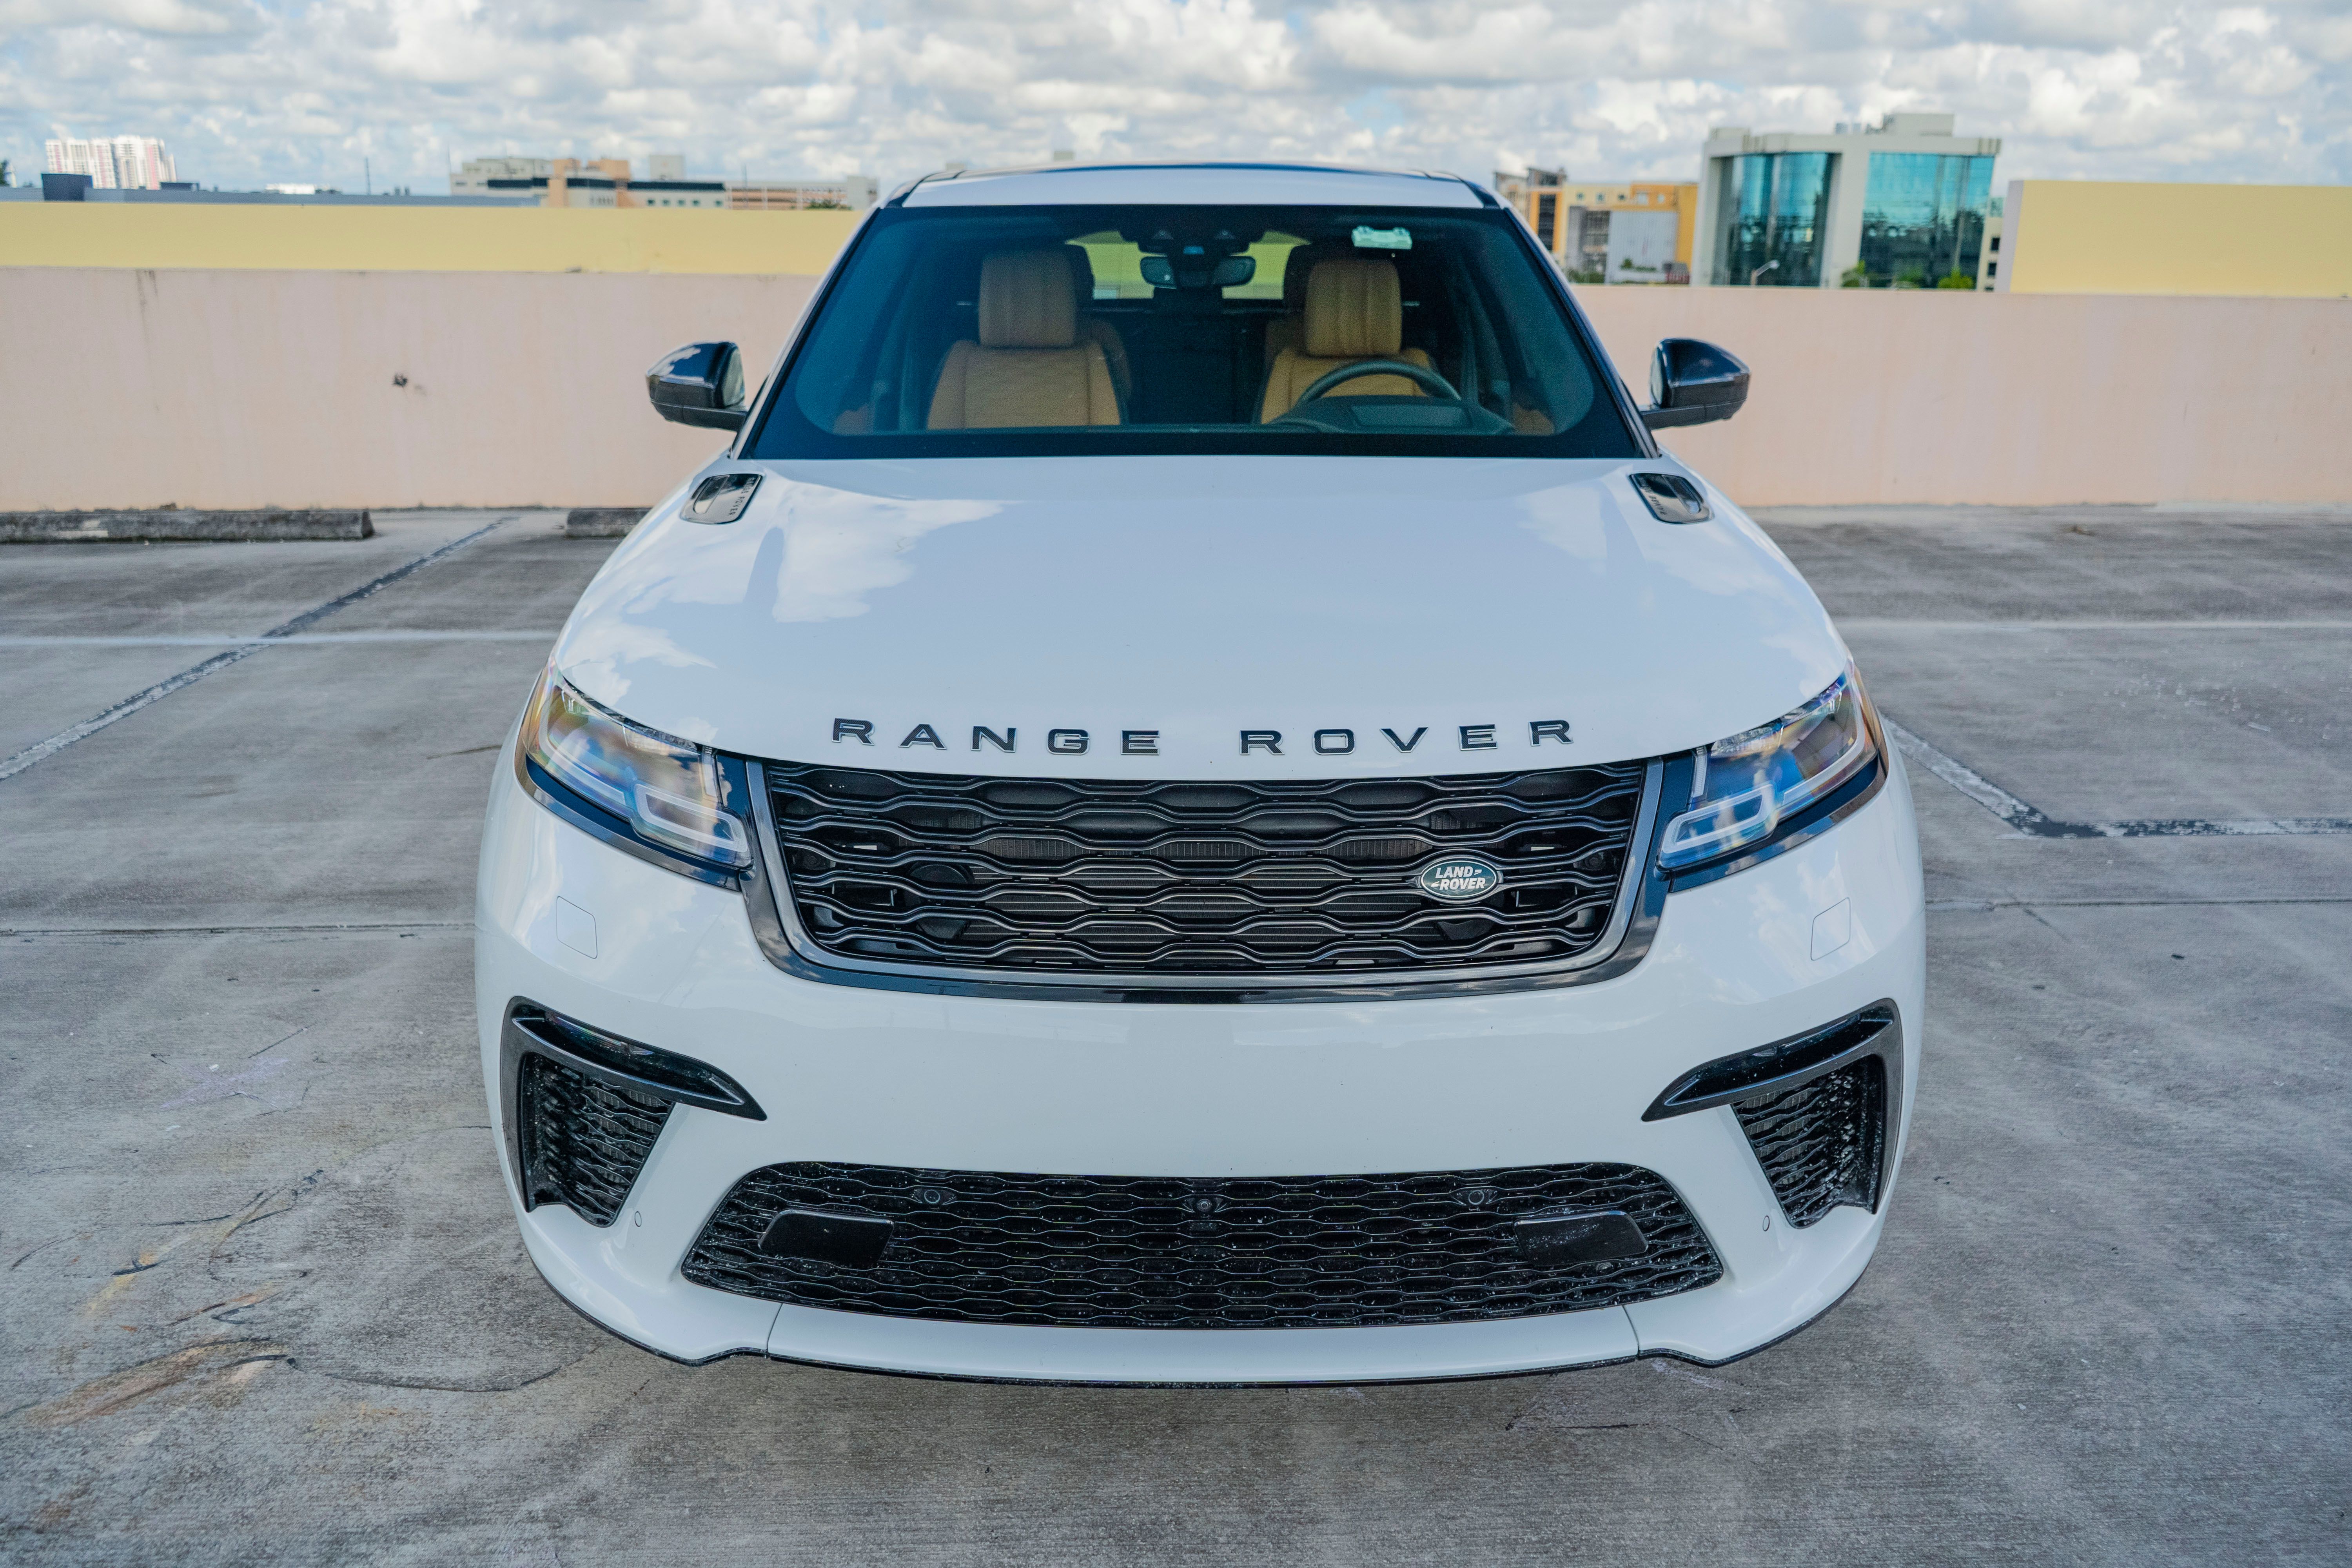 2020 Land Rover Range Rover Velar - Driven